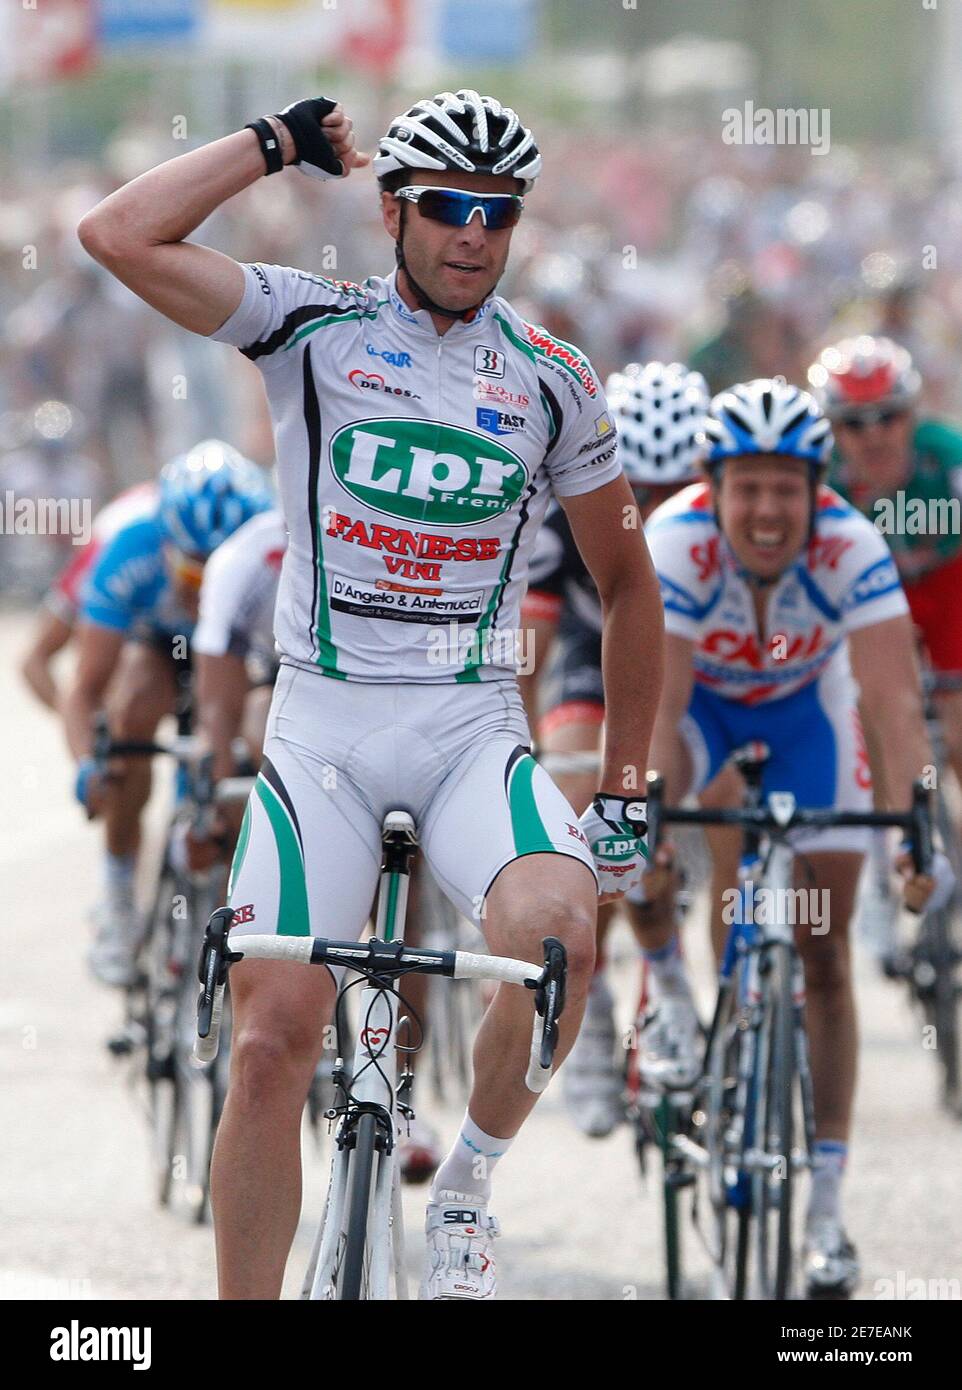 mangel trimme aflivning Alessandro Petacchi of Italy raises his arm as he crosses the finishing  line of the 97th Scheldeprijs/Grand Prix de l'Escaut cycling race in  Schoten April 15, 2009. Kenny Van Hummel (R) of